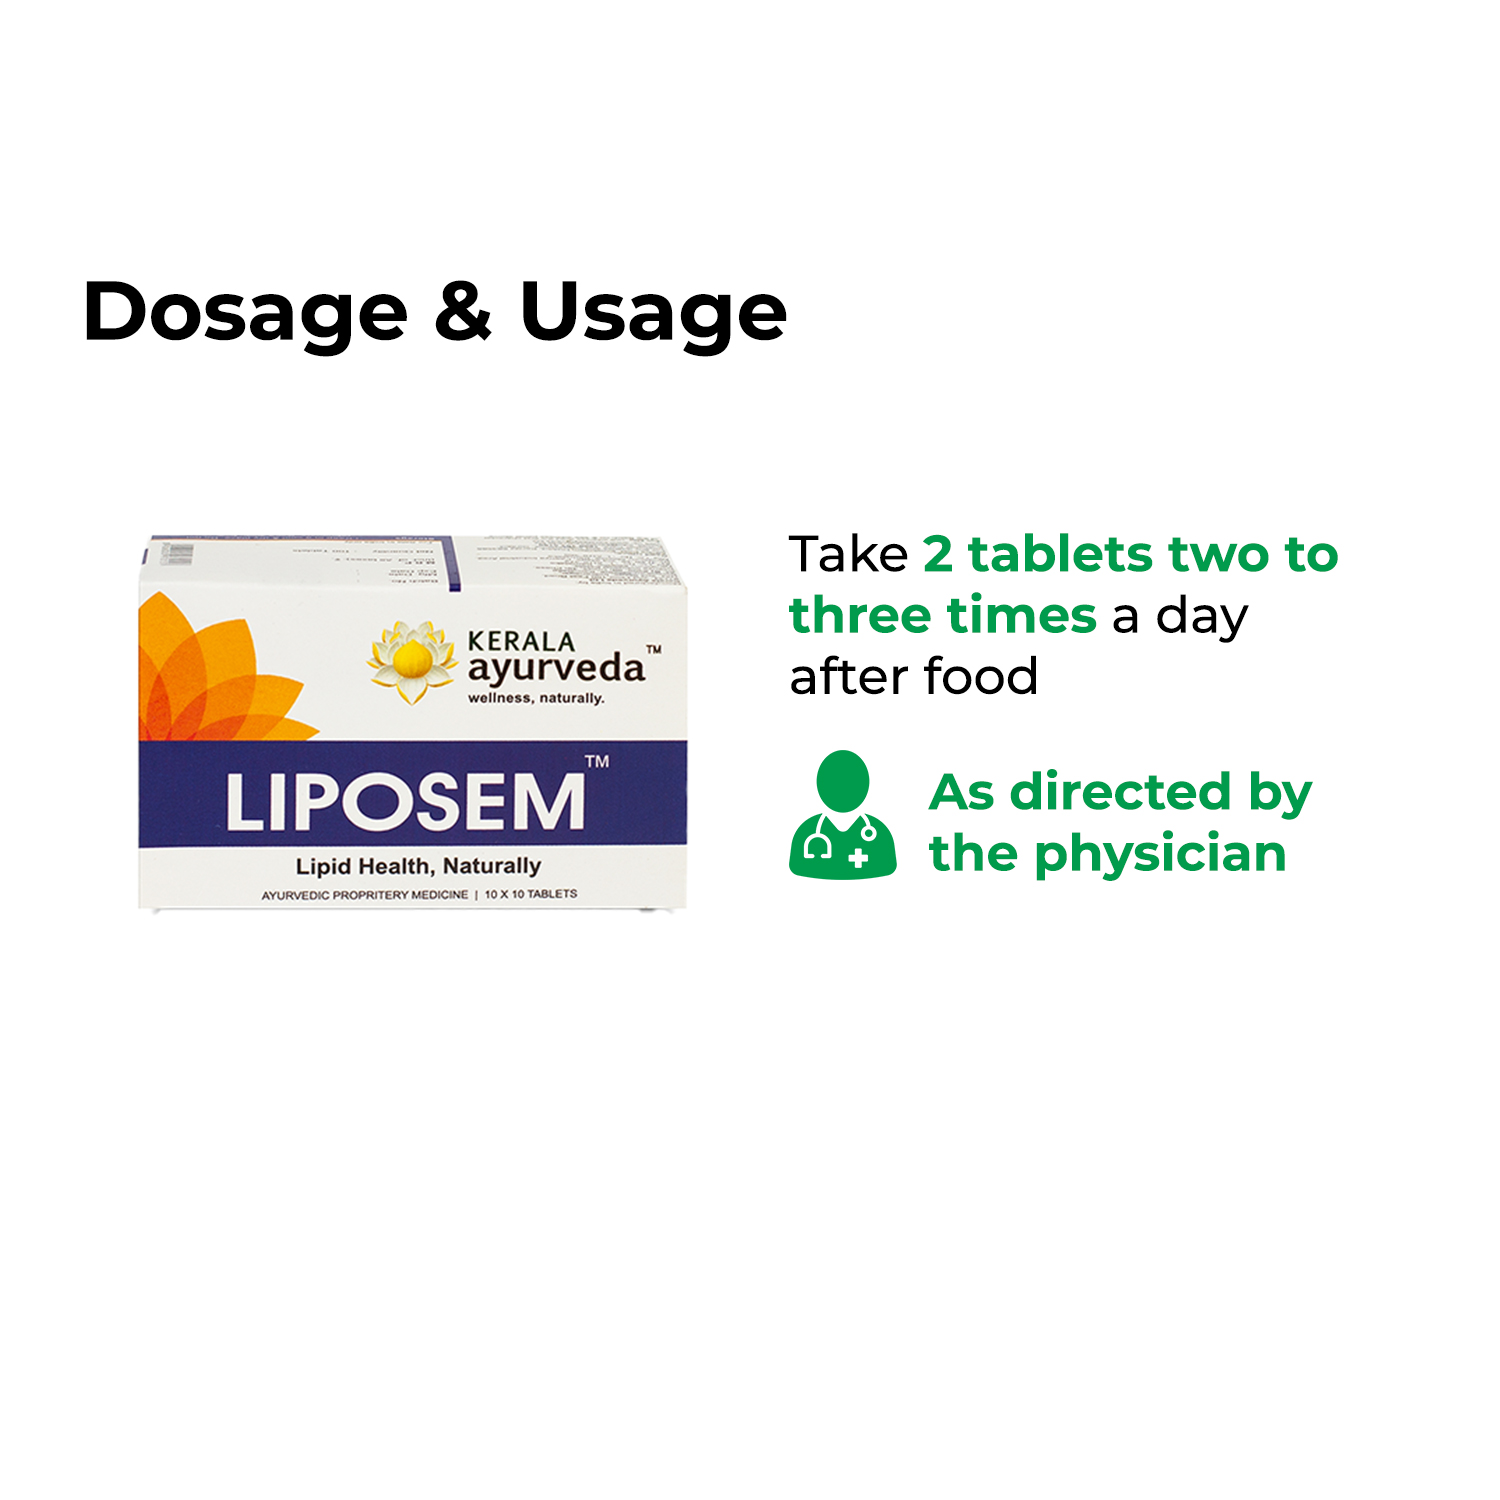 Liposem ayurvedic cholesterol control tablet - Usage and Dosage